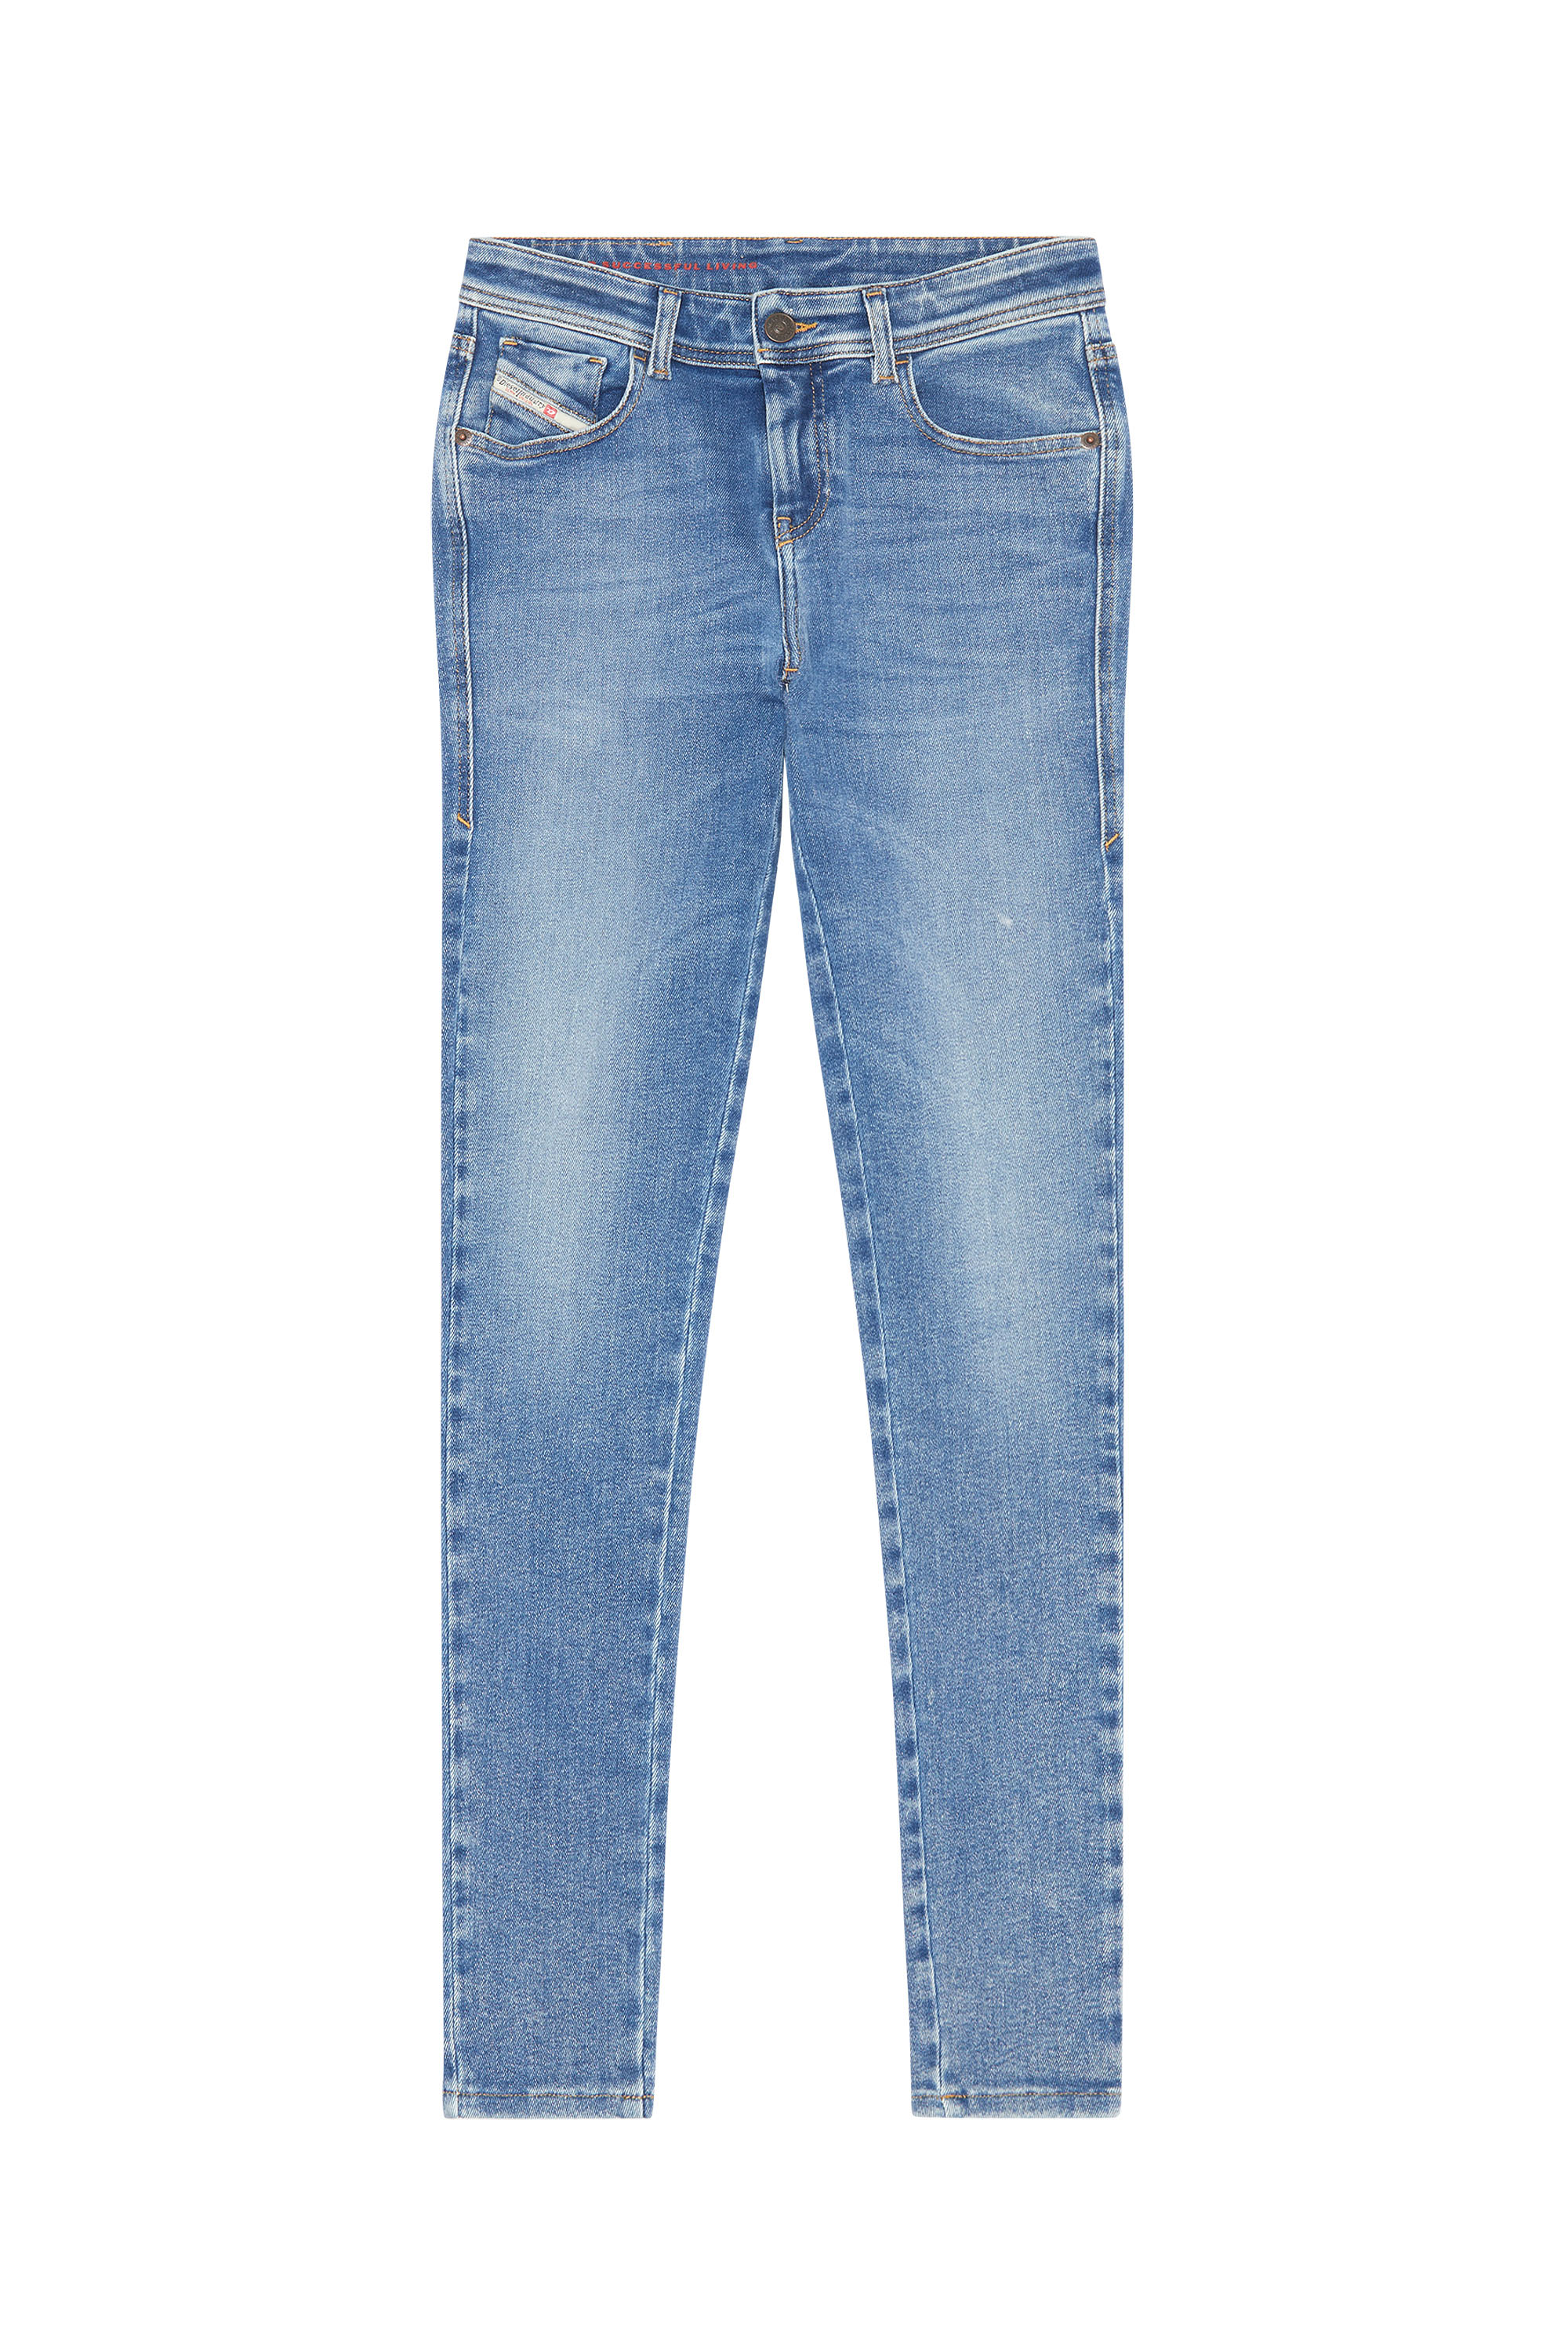 Super skinny Jeans 2017 Slandy 09D62, Bleu moyen - Jeans